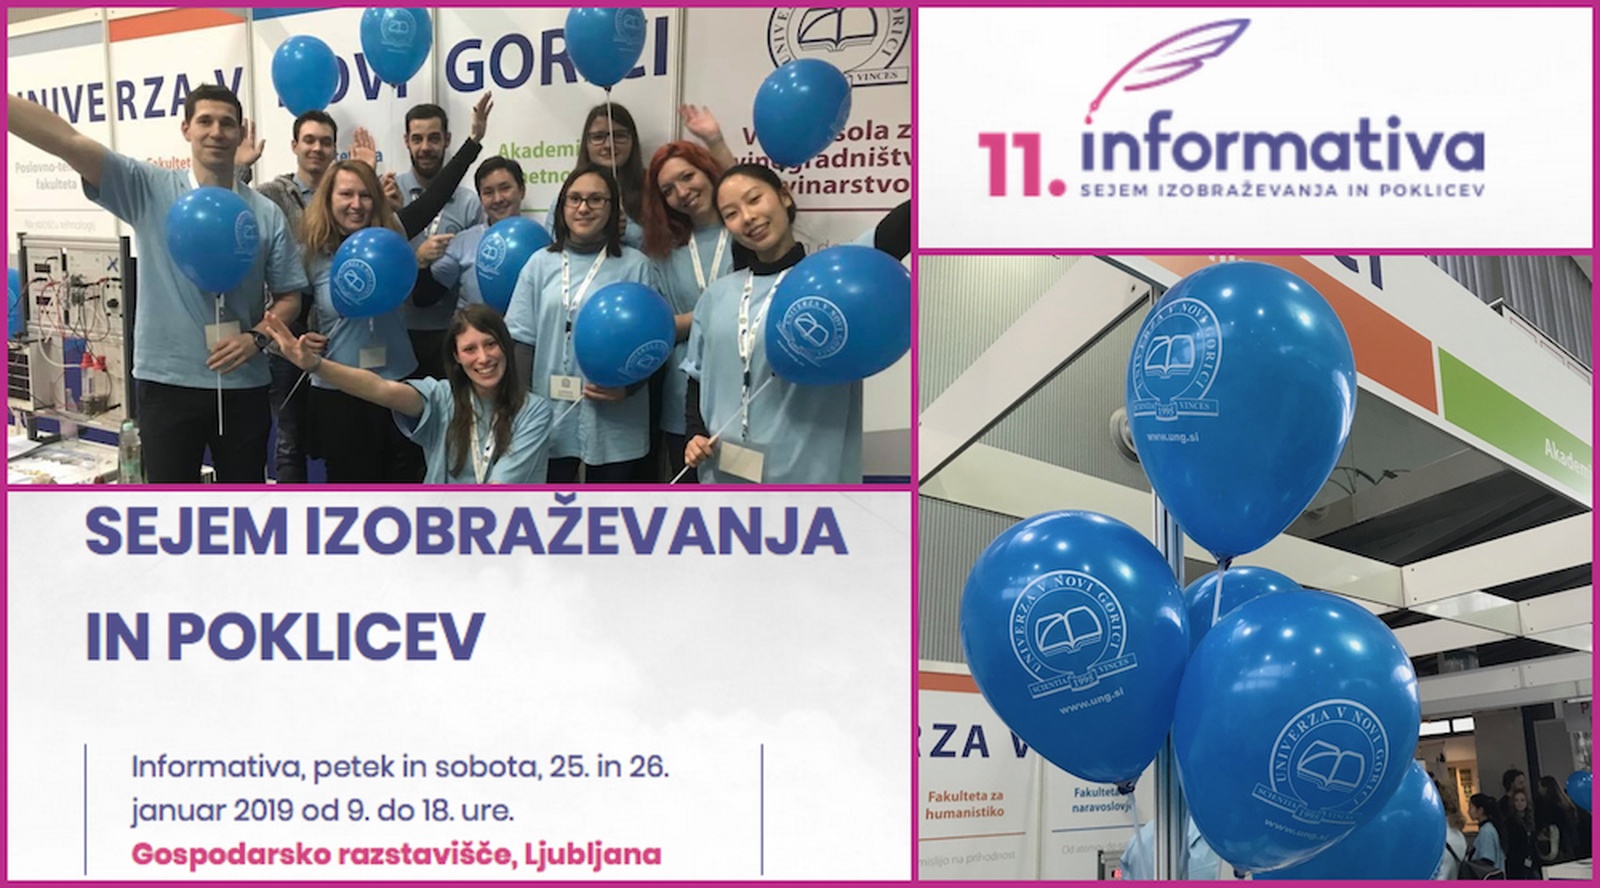 University of Nova Gorica taking part in the Education and Career Fair